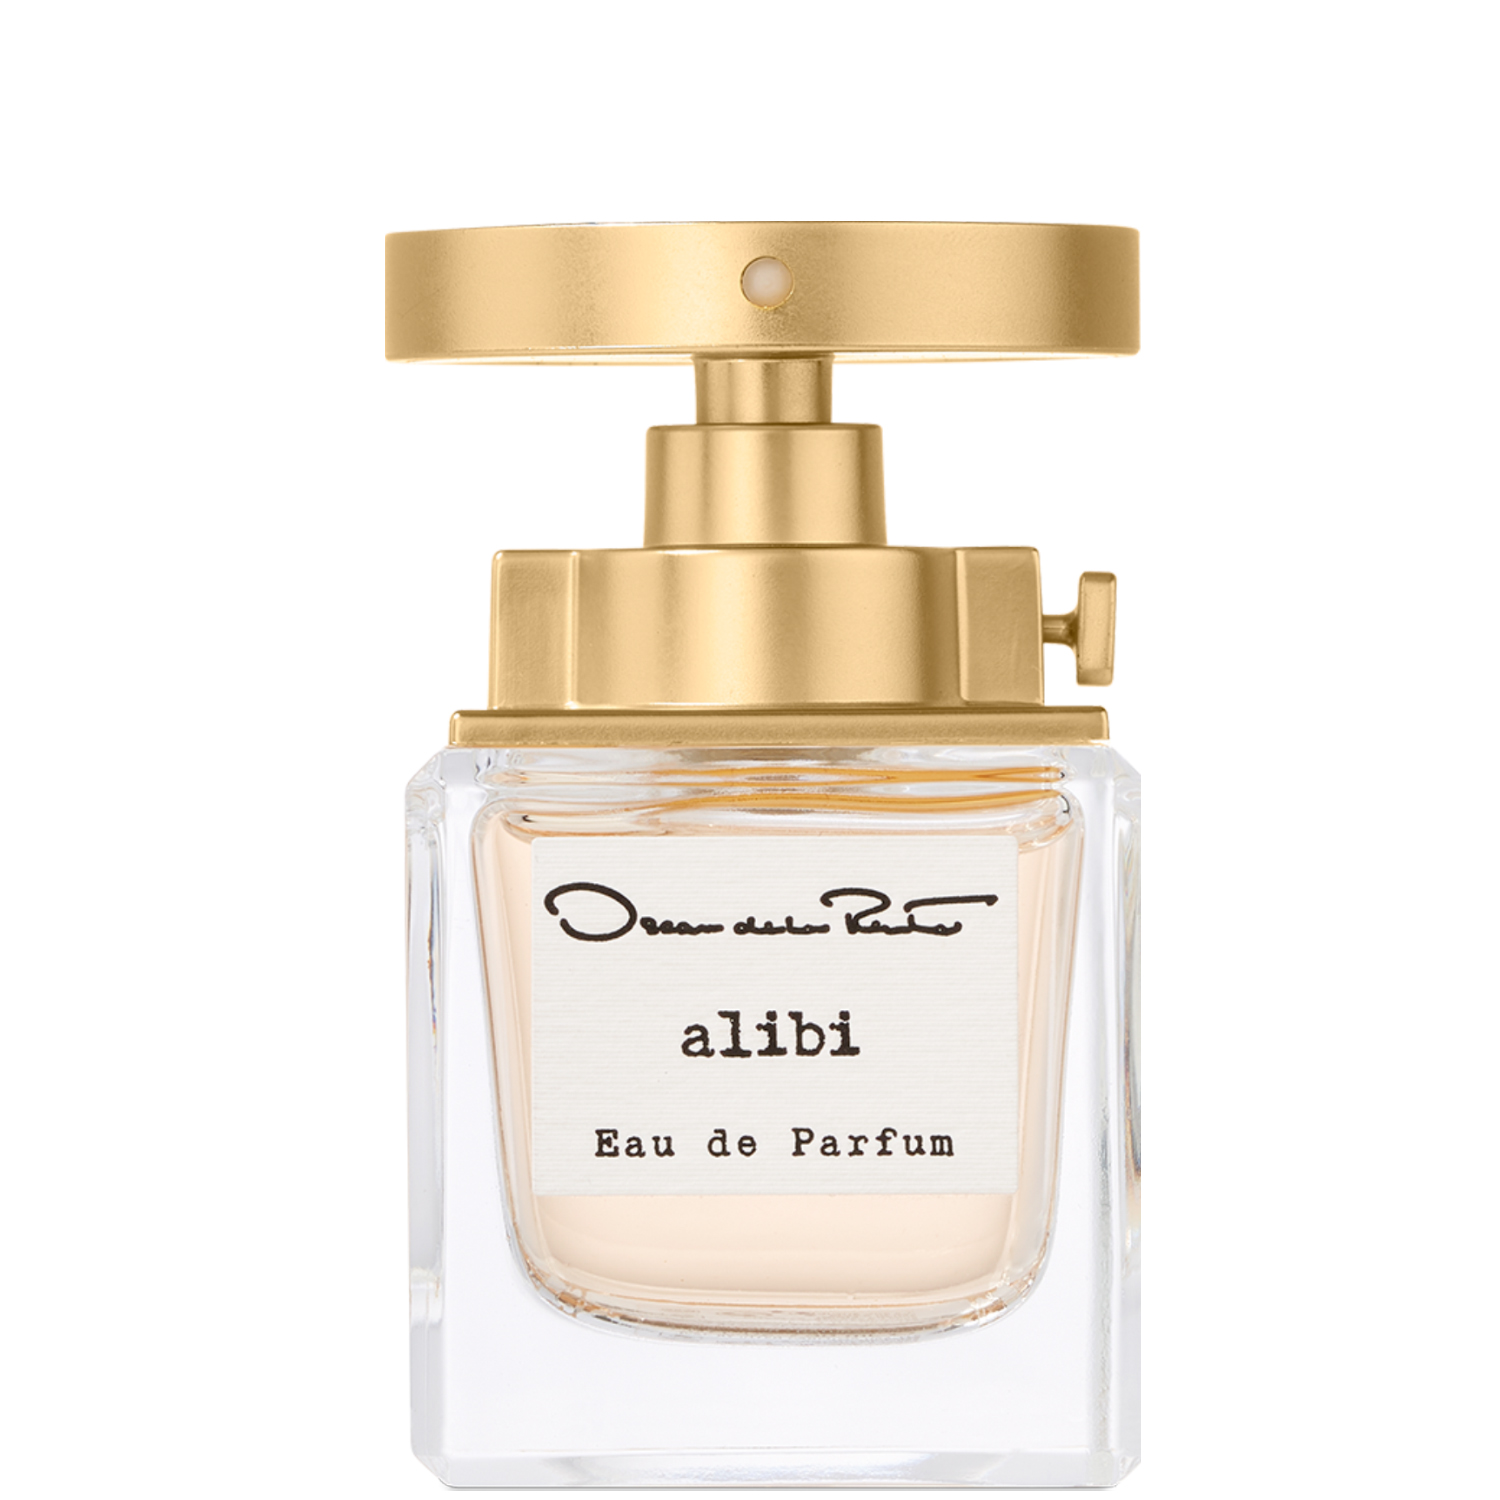 Oscar de la Renta Alibi Eau de Parfum 30ml